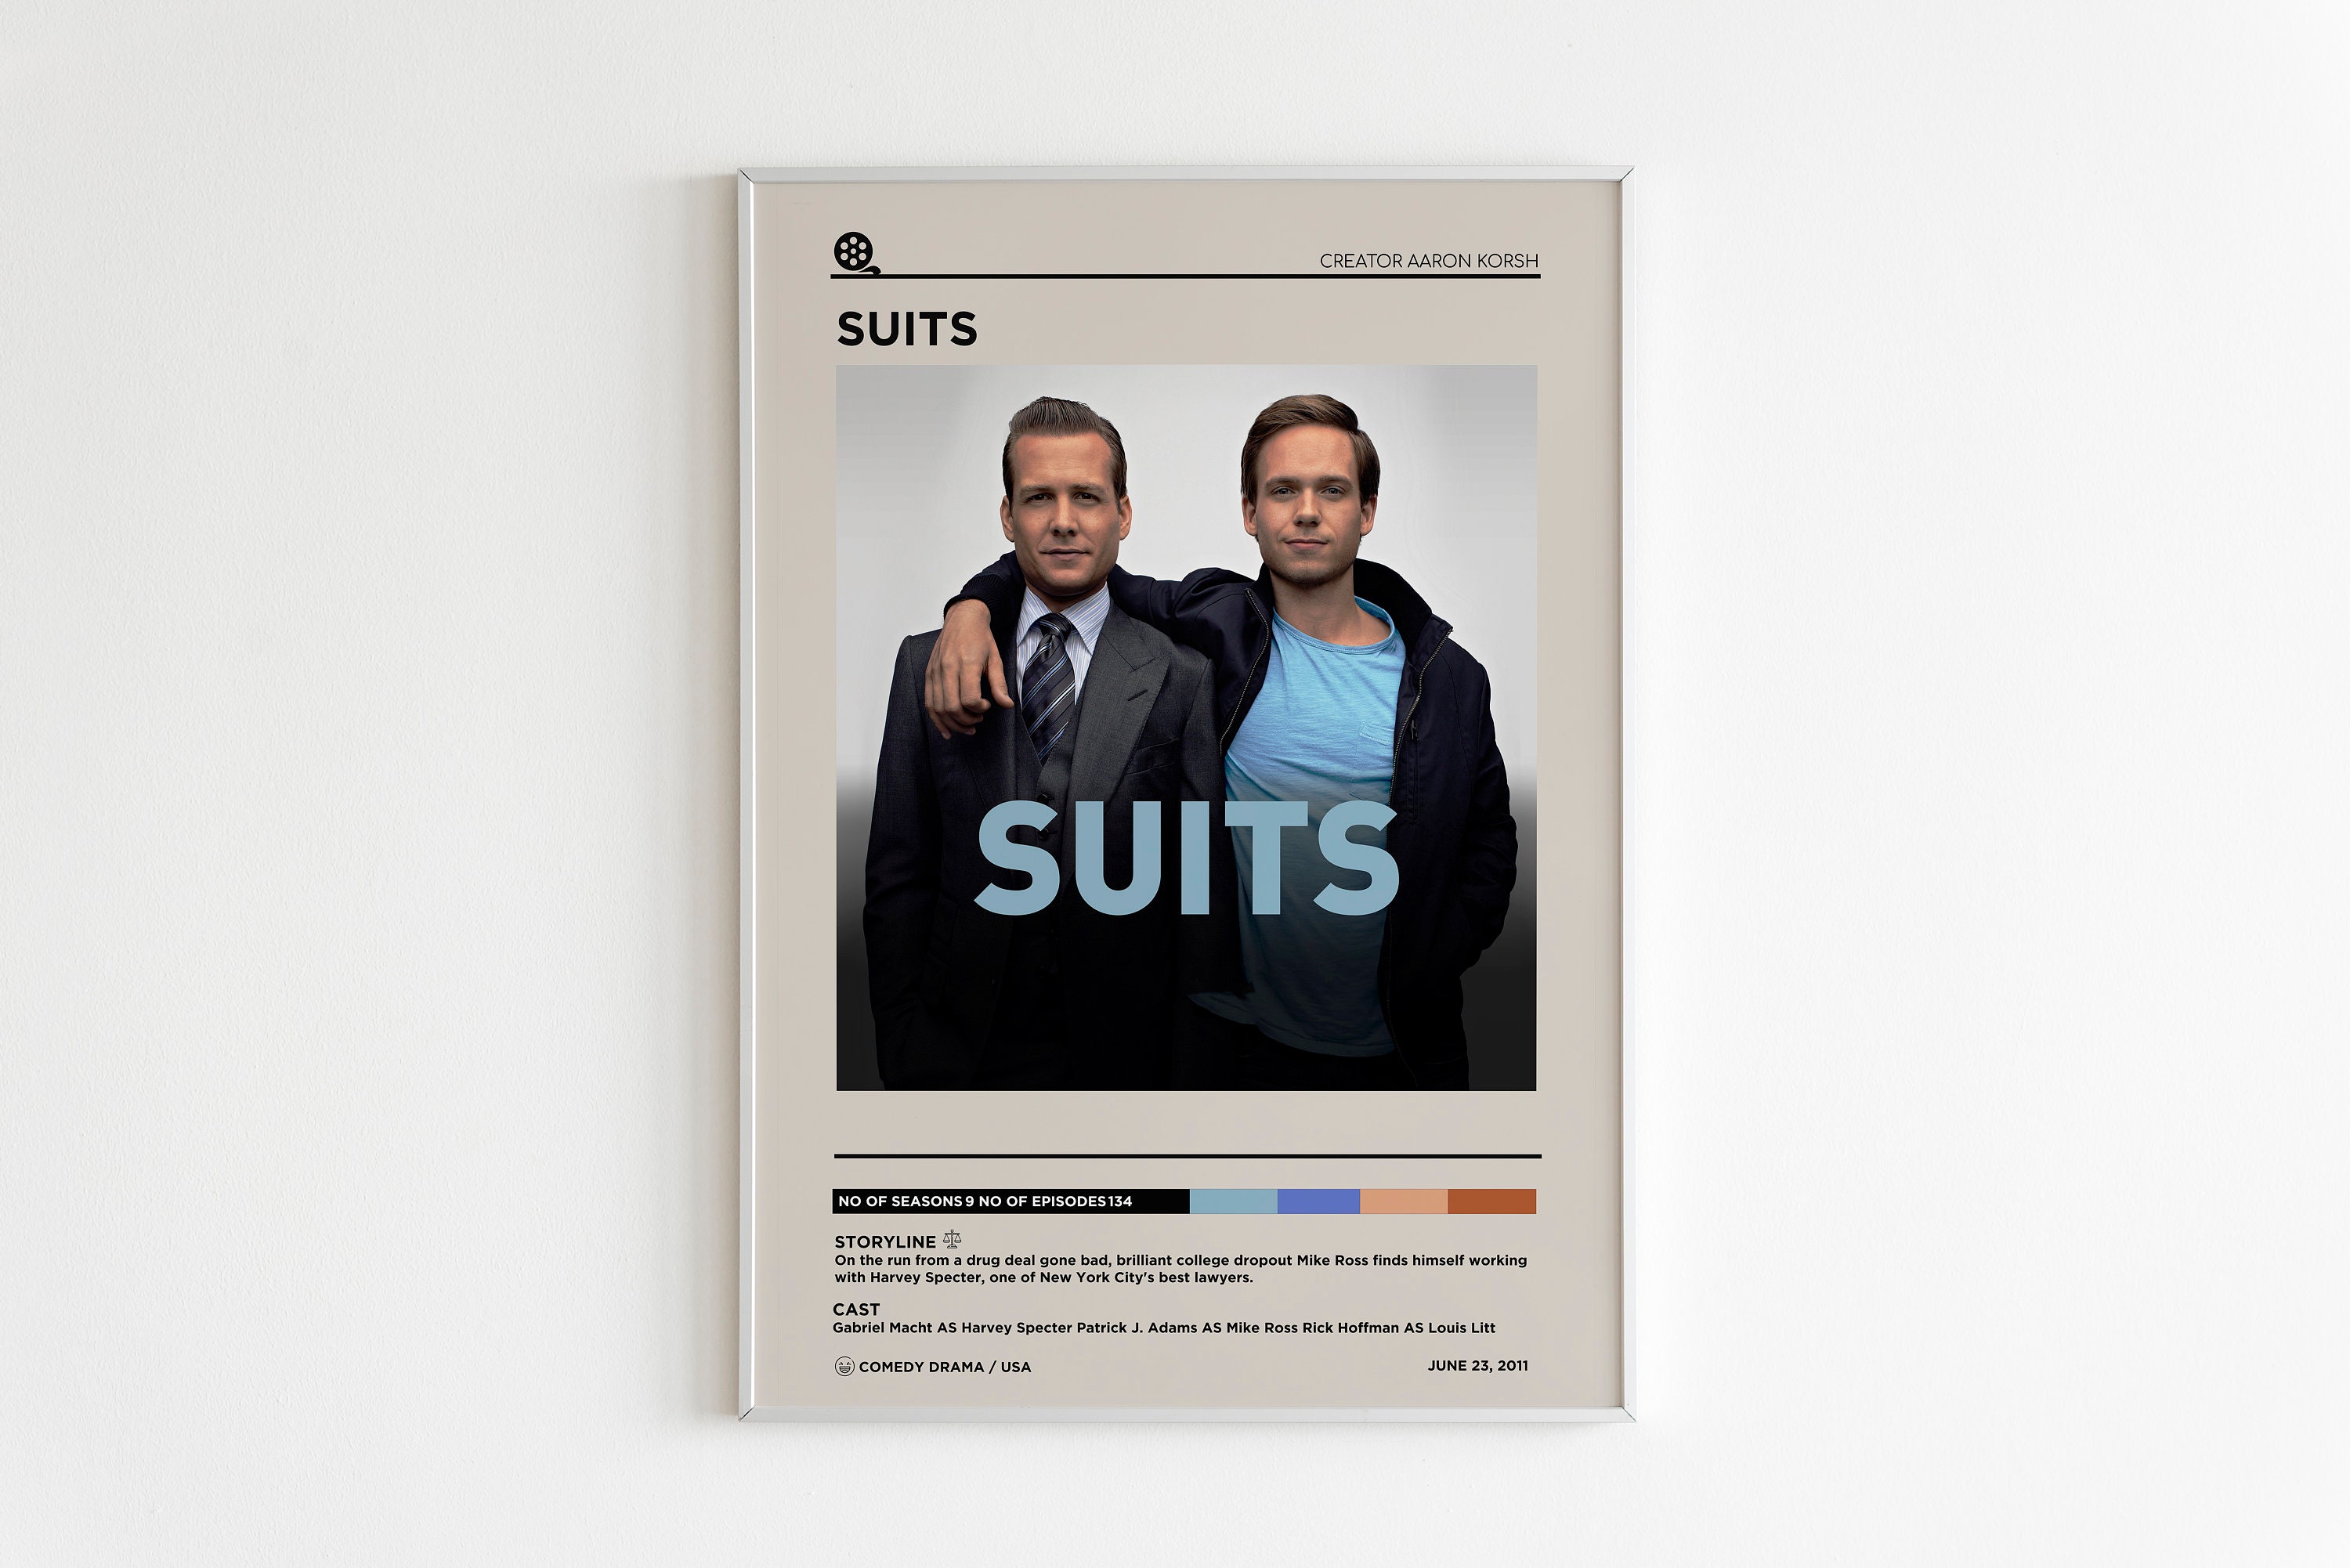 Egyptian Remake of “Suits” Gets New Poster | Sada Elbalad